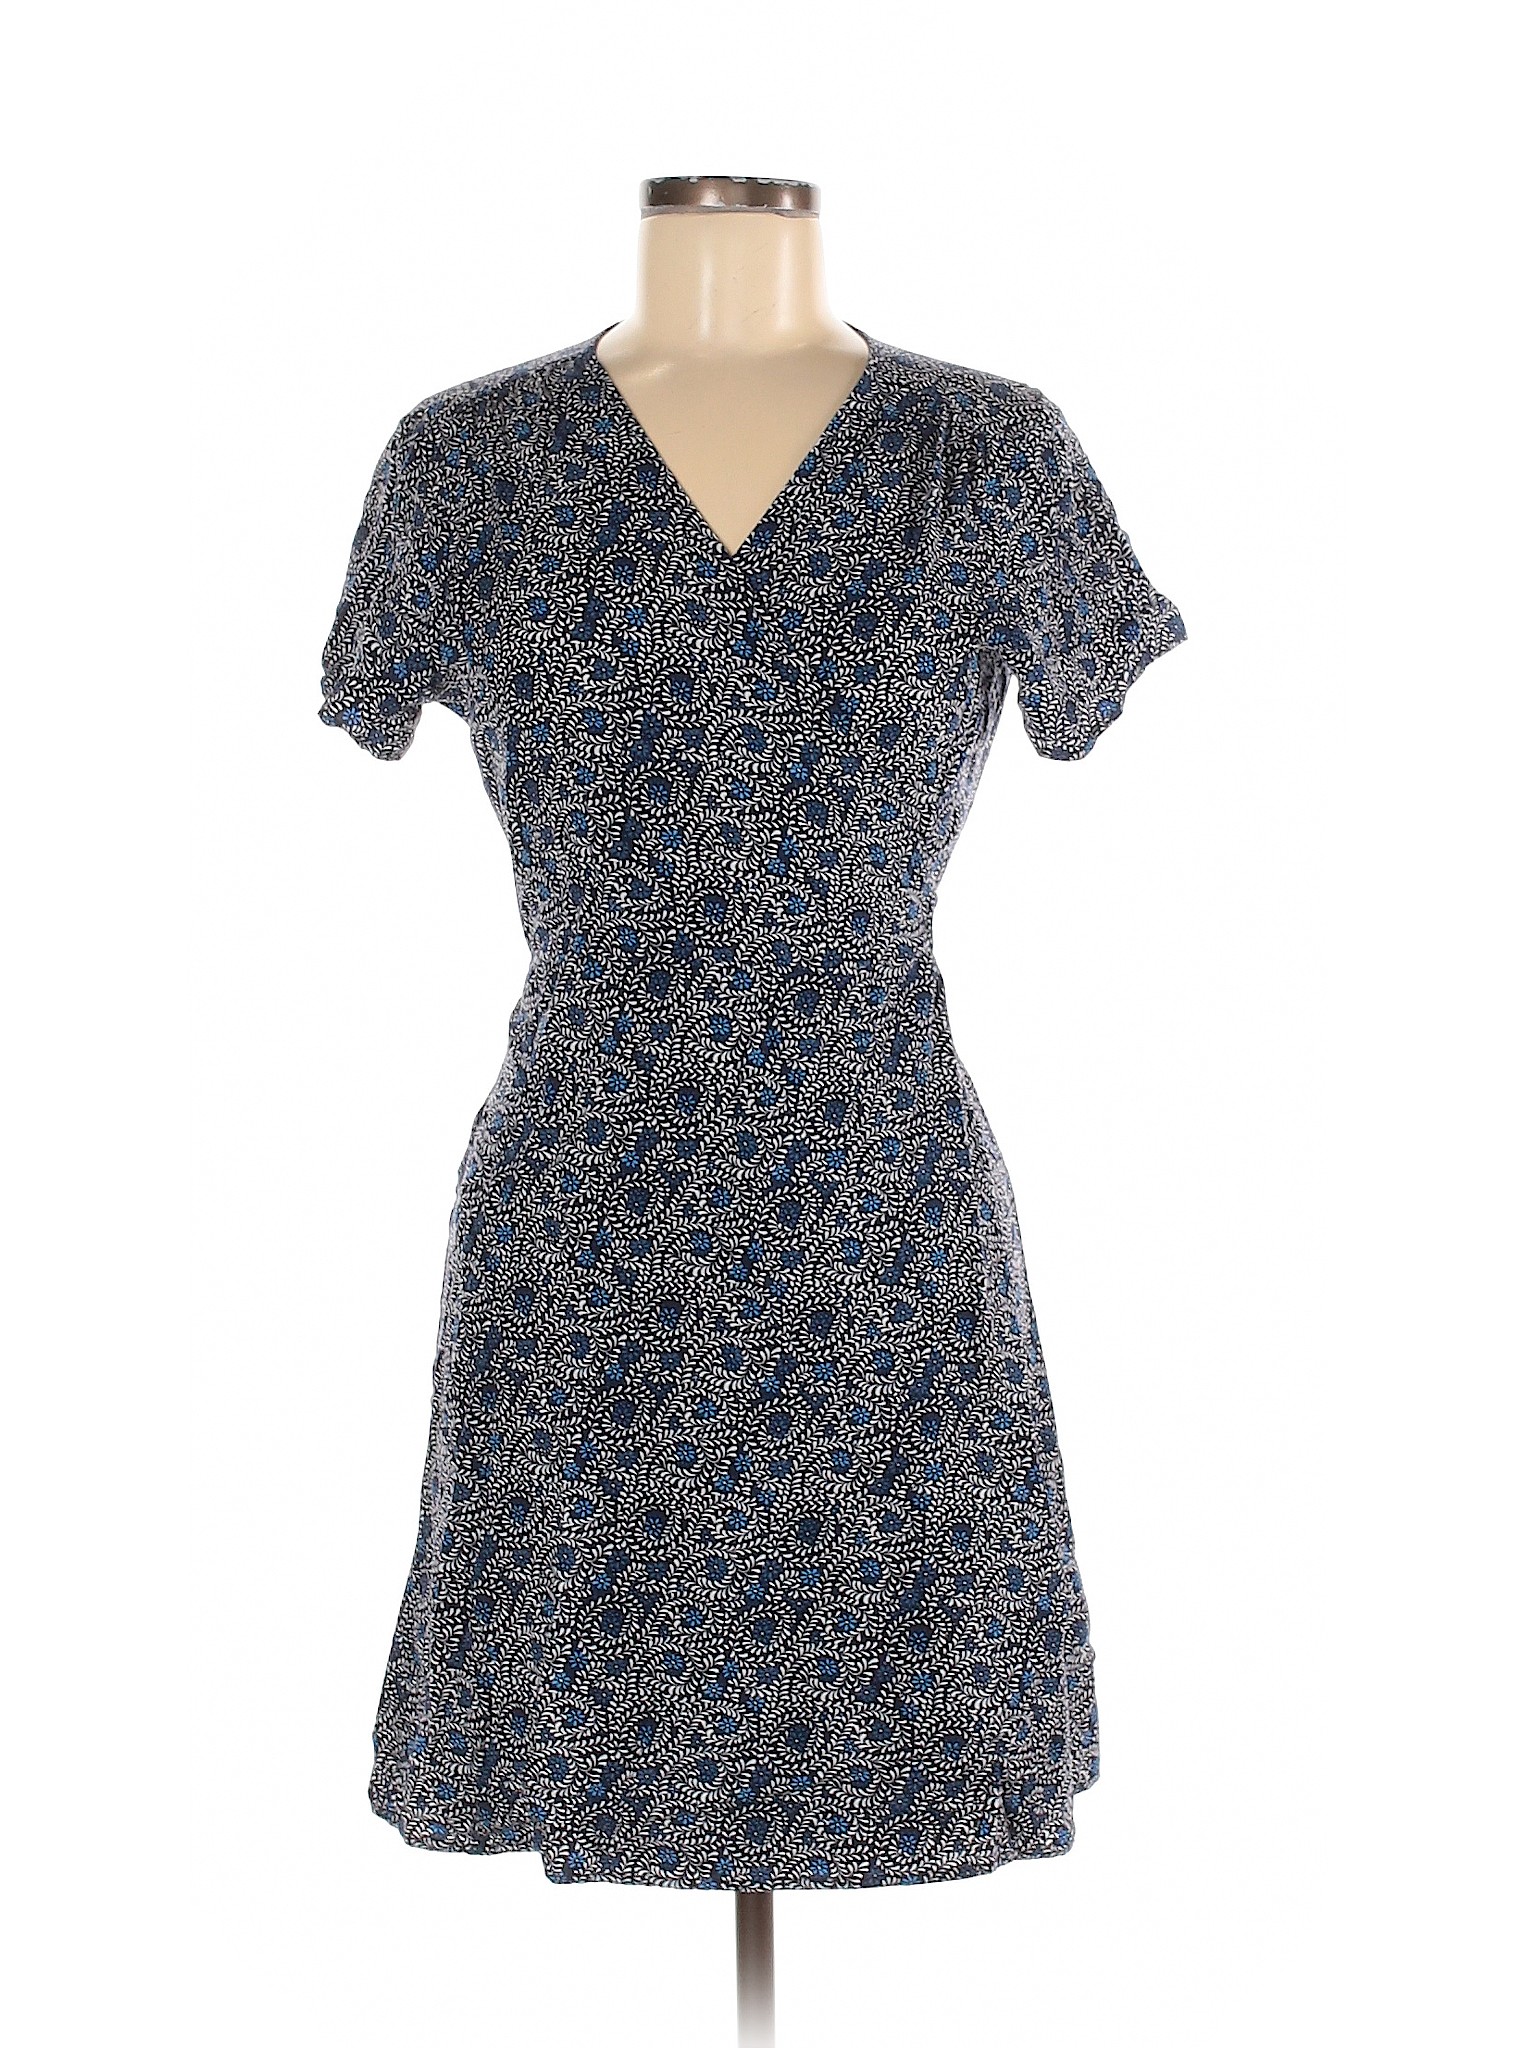 Gap Women Blue Casual Dress M Petites | eBay